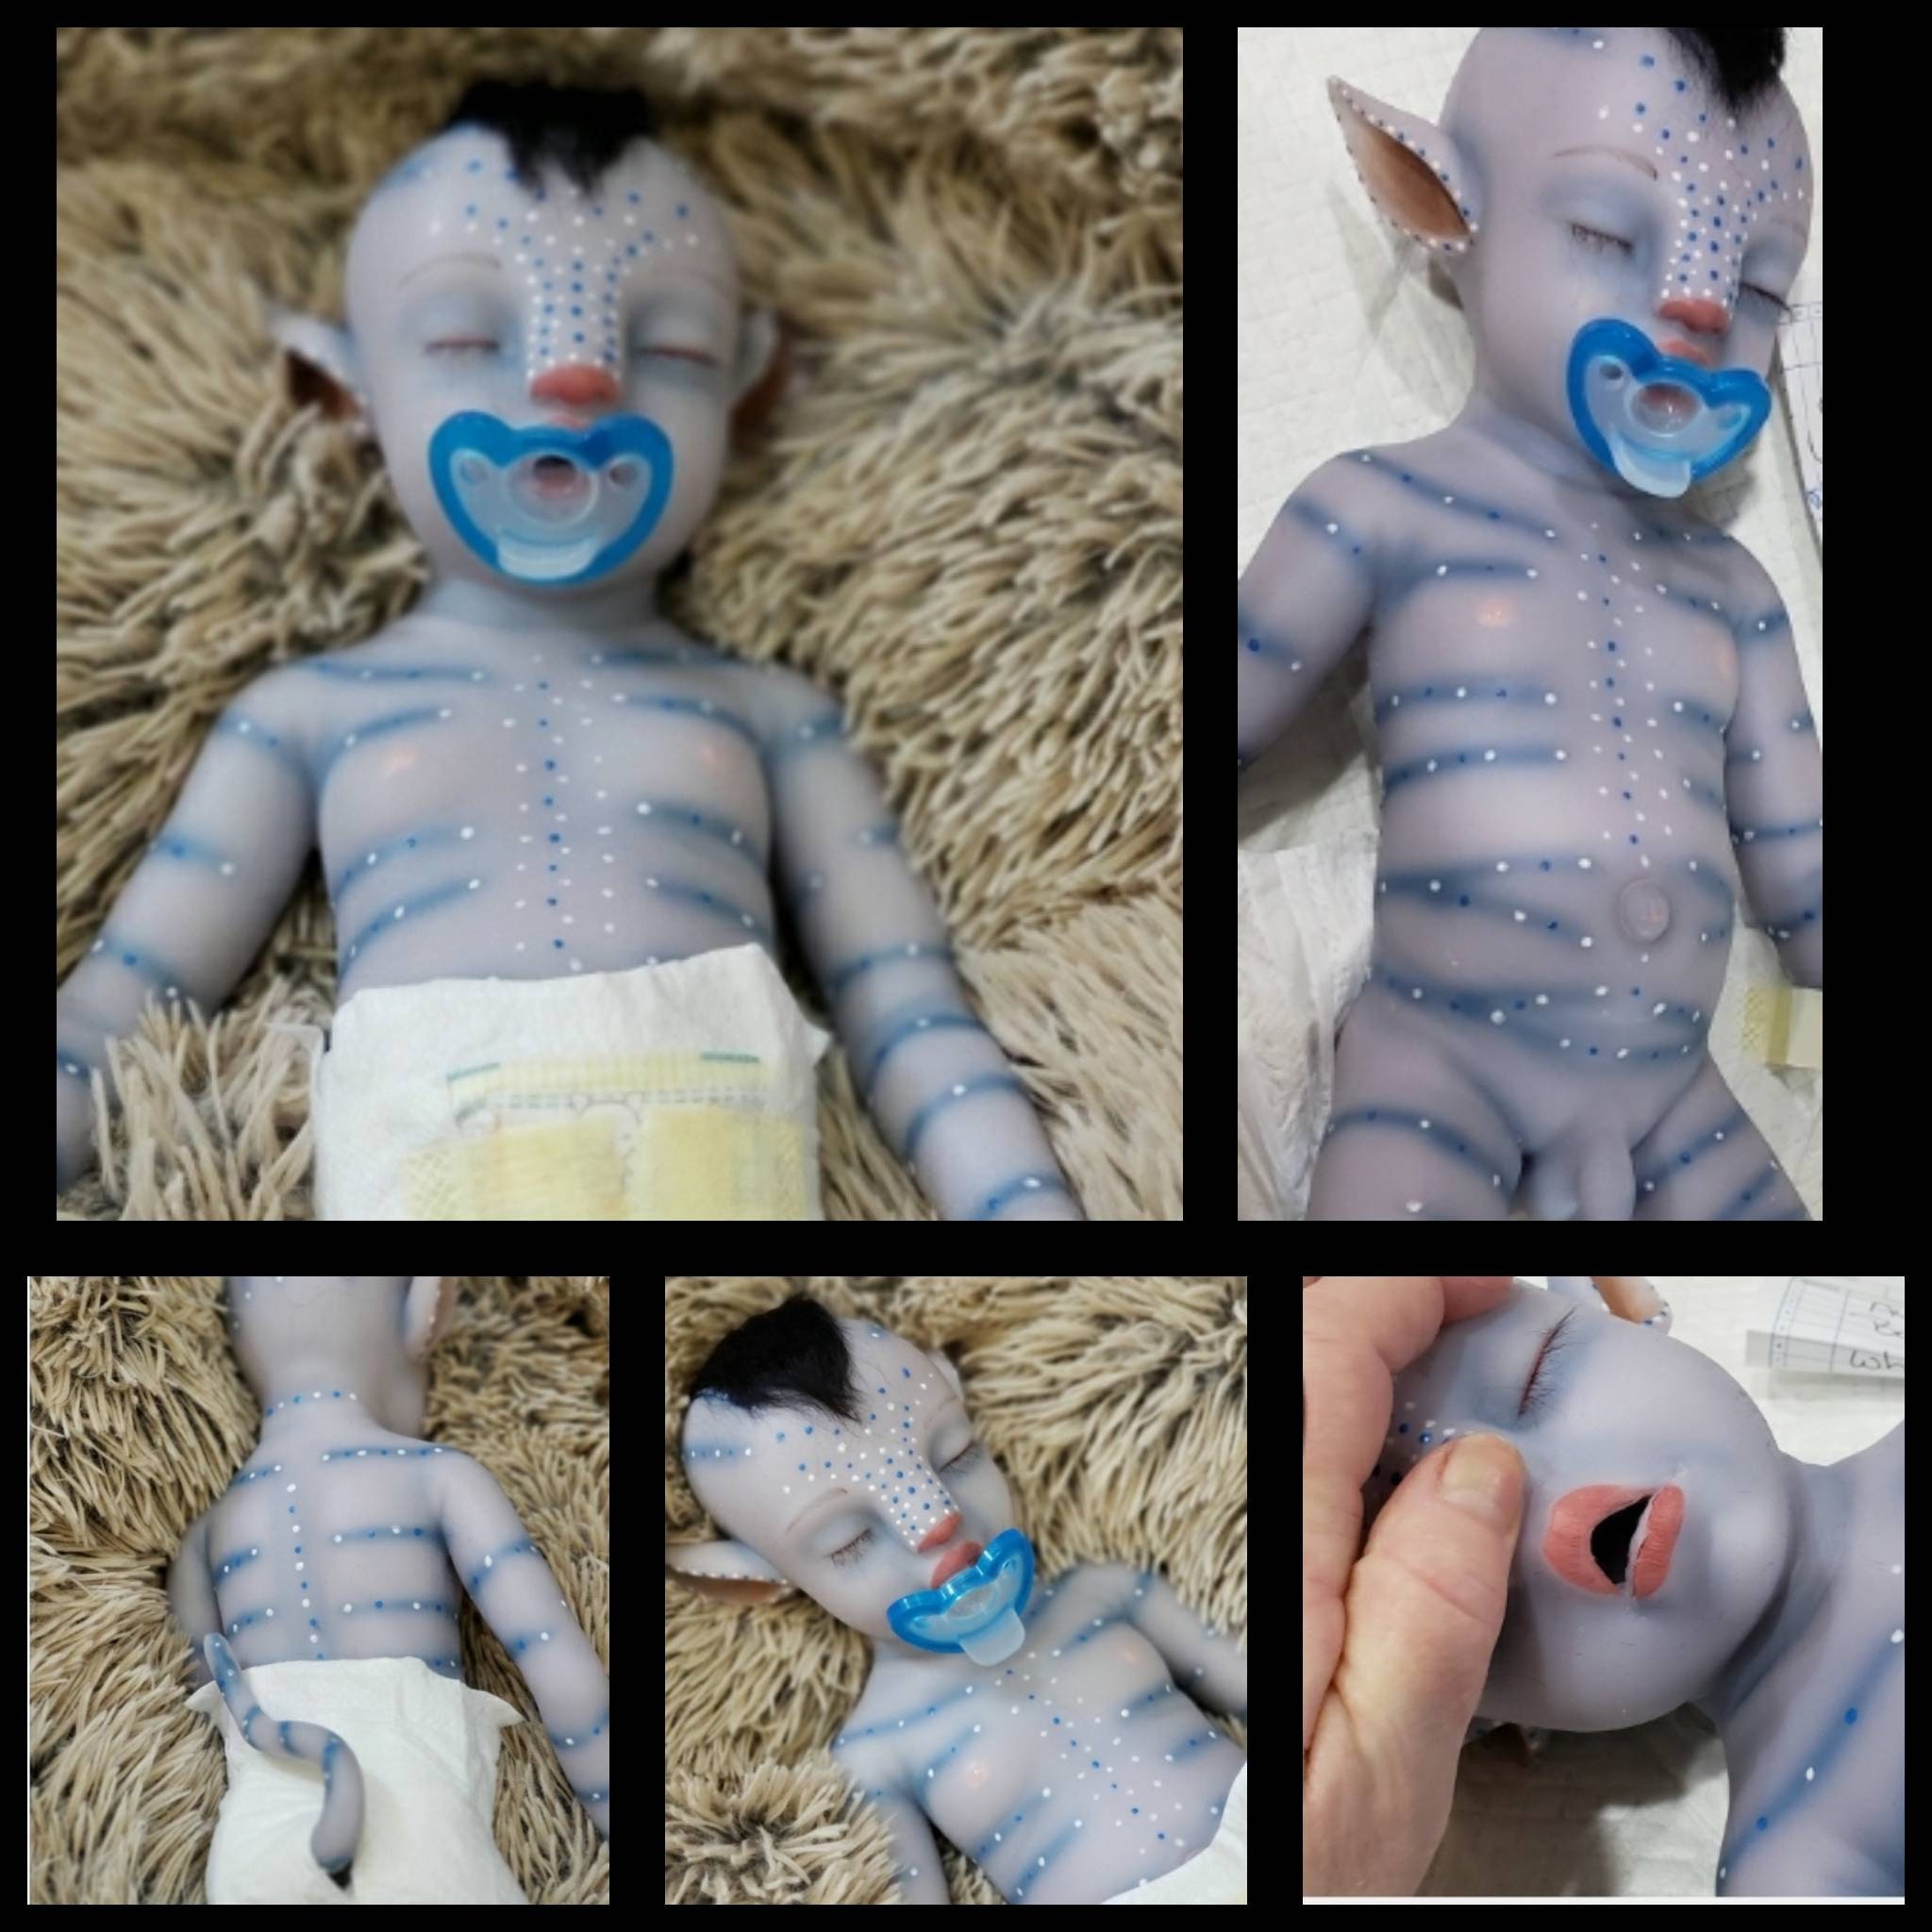 Avatar reborn dolls